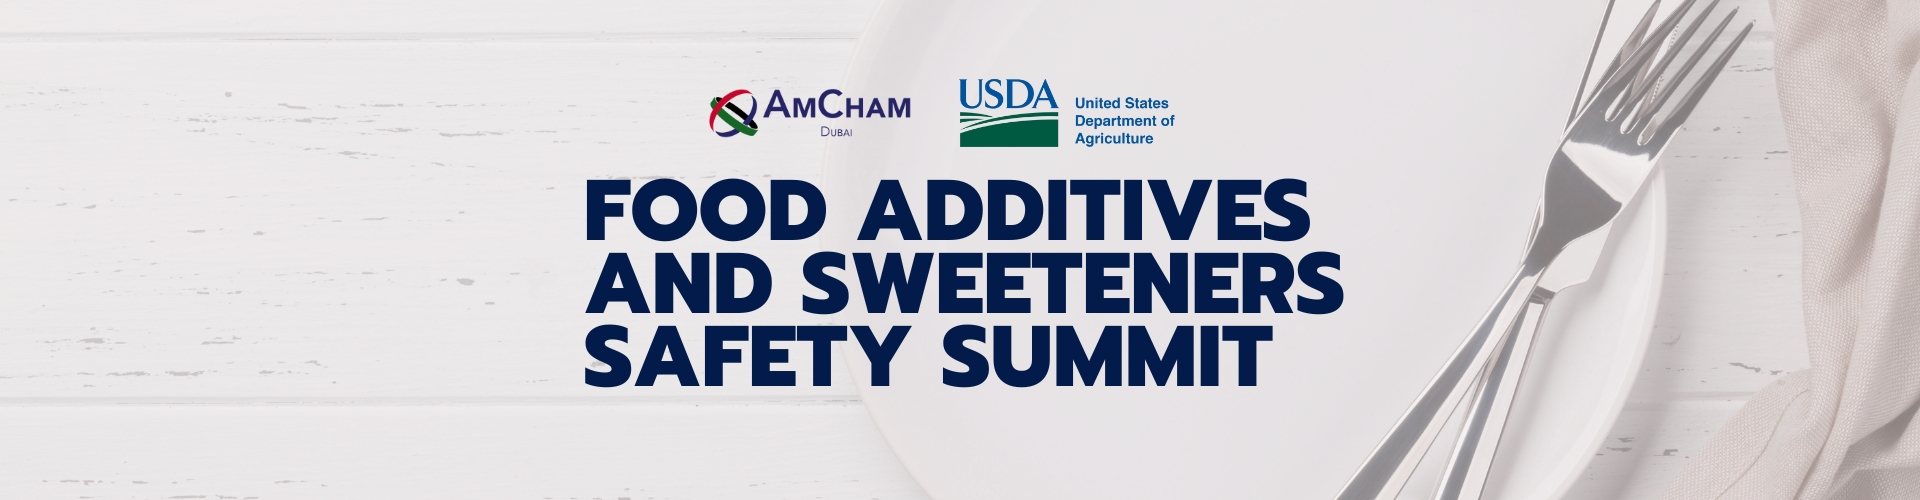 thumbnails Food Additives Safety Summit